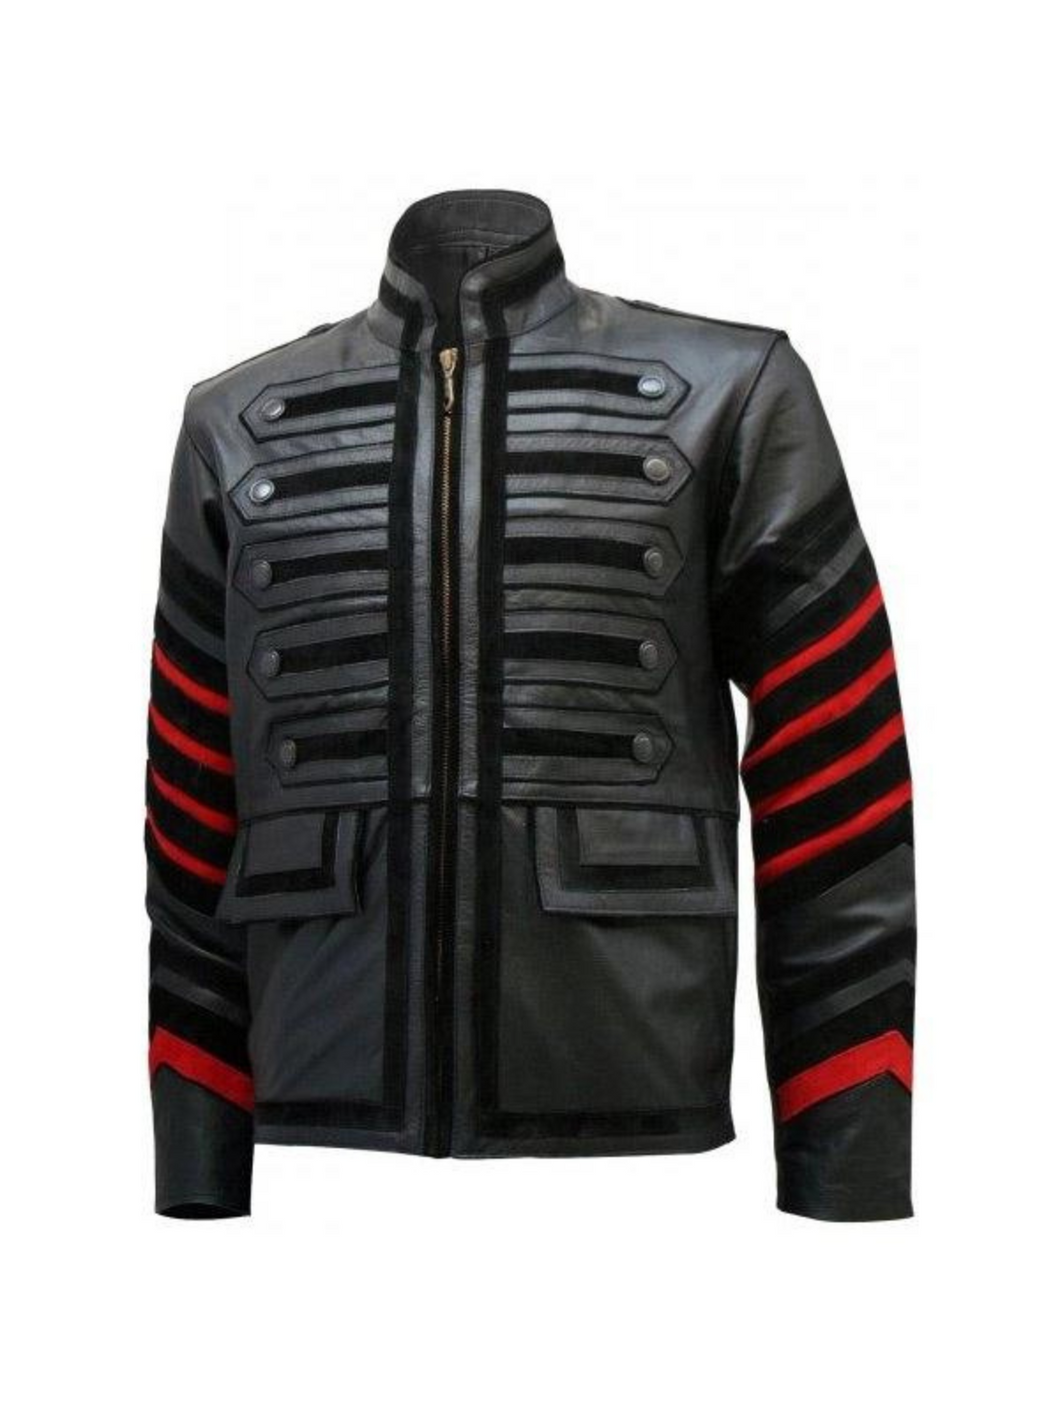 Men’s Black Leather Military Jacket